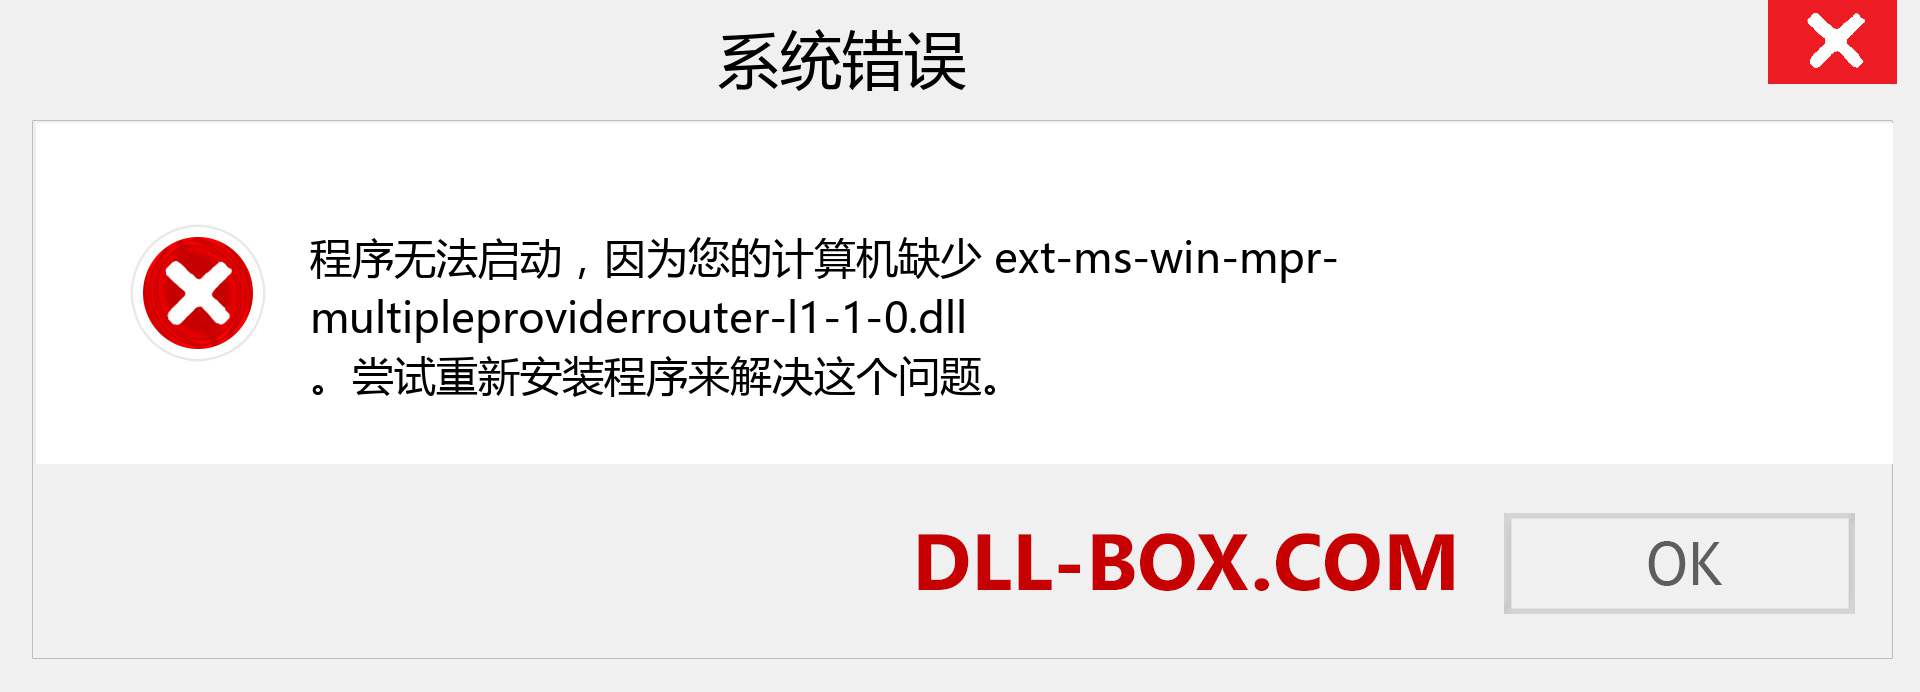 ext-ms-win-mpr-multipleproviderrouter-l1-1-0.dll 文件丢失？。 适用于 Windows 7、8、10 的下载 - 修复 Windows、照片、图像上的 ext-ms-win-mpr-multipleproviderrouter-l1-1-0 dll 丢失错误